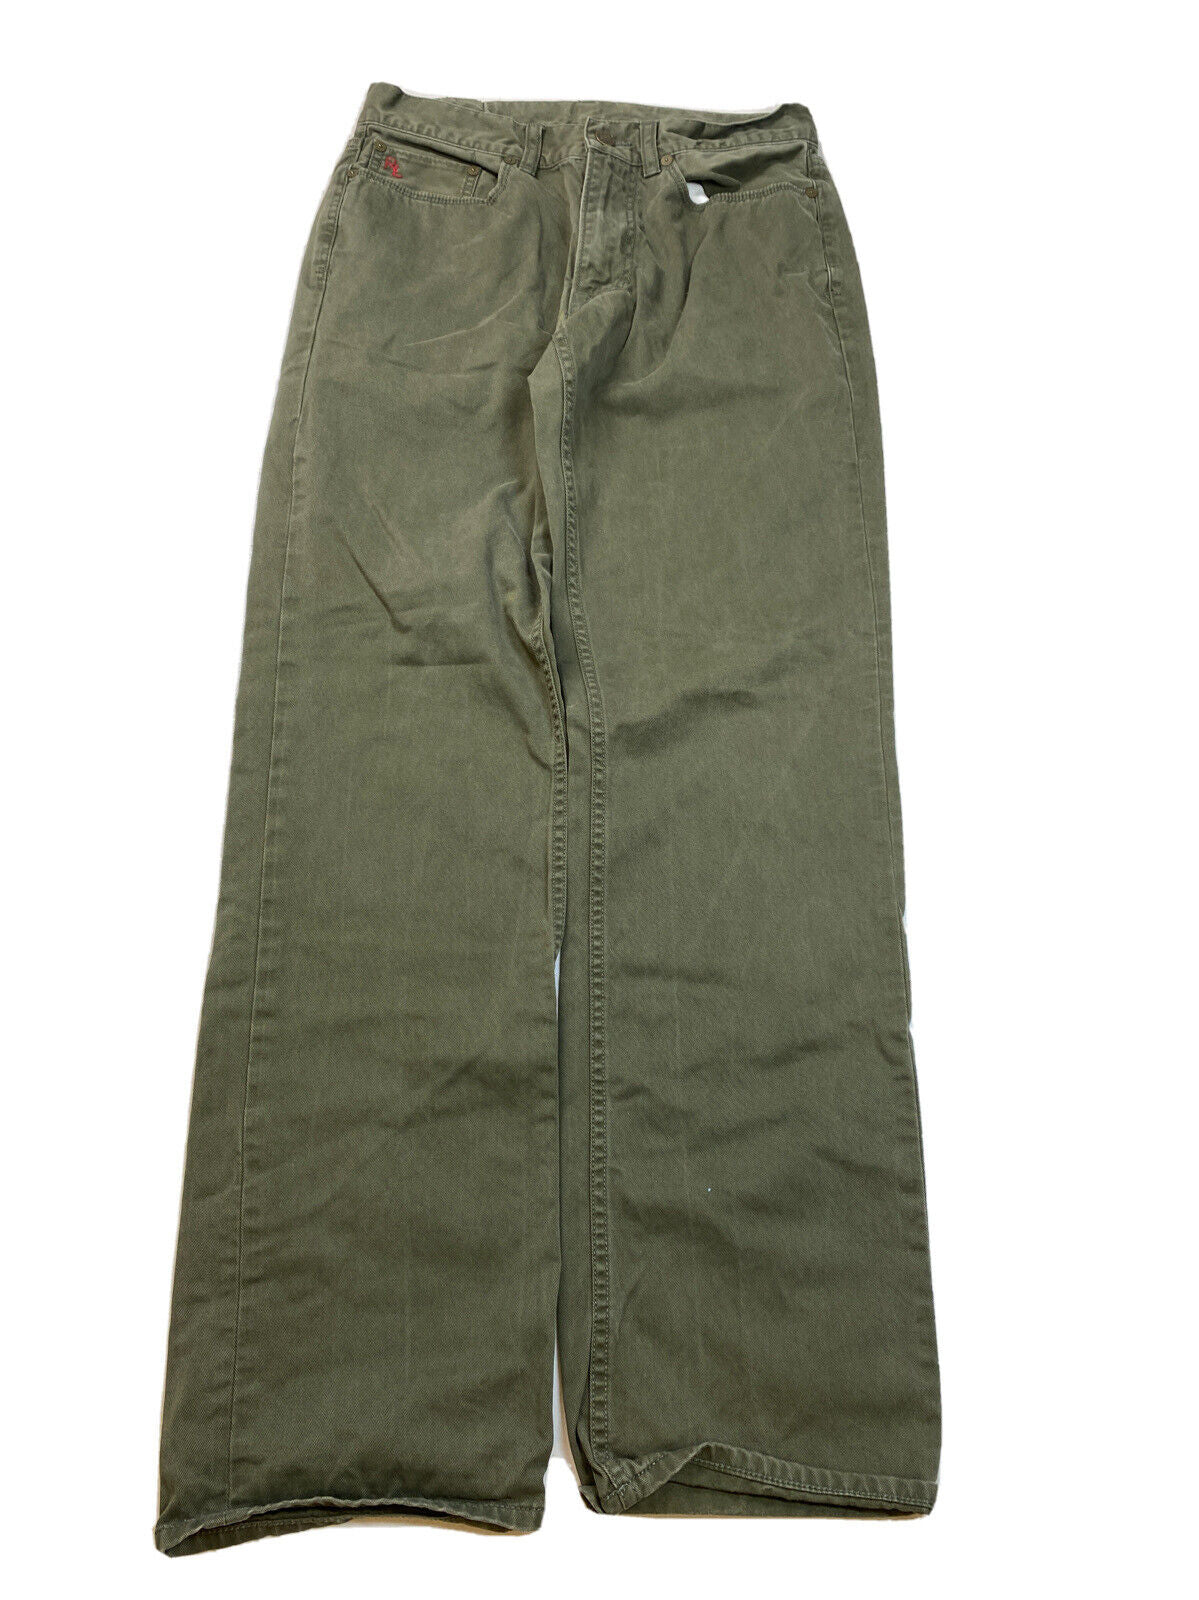 Polo Ralph Lauren Men's Green Straight Leg Chino Pants - 30x32